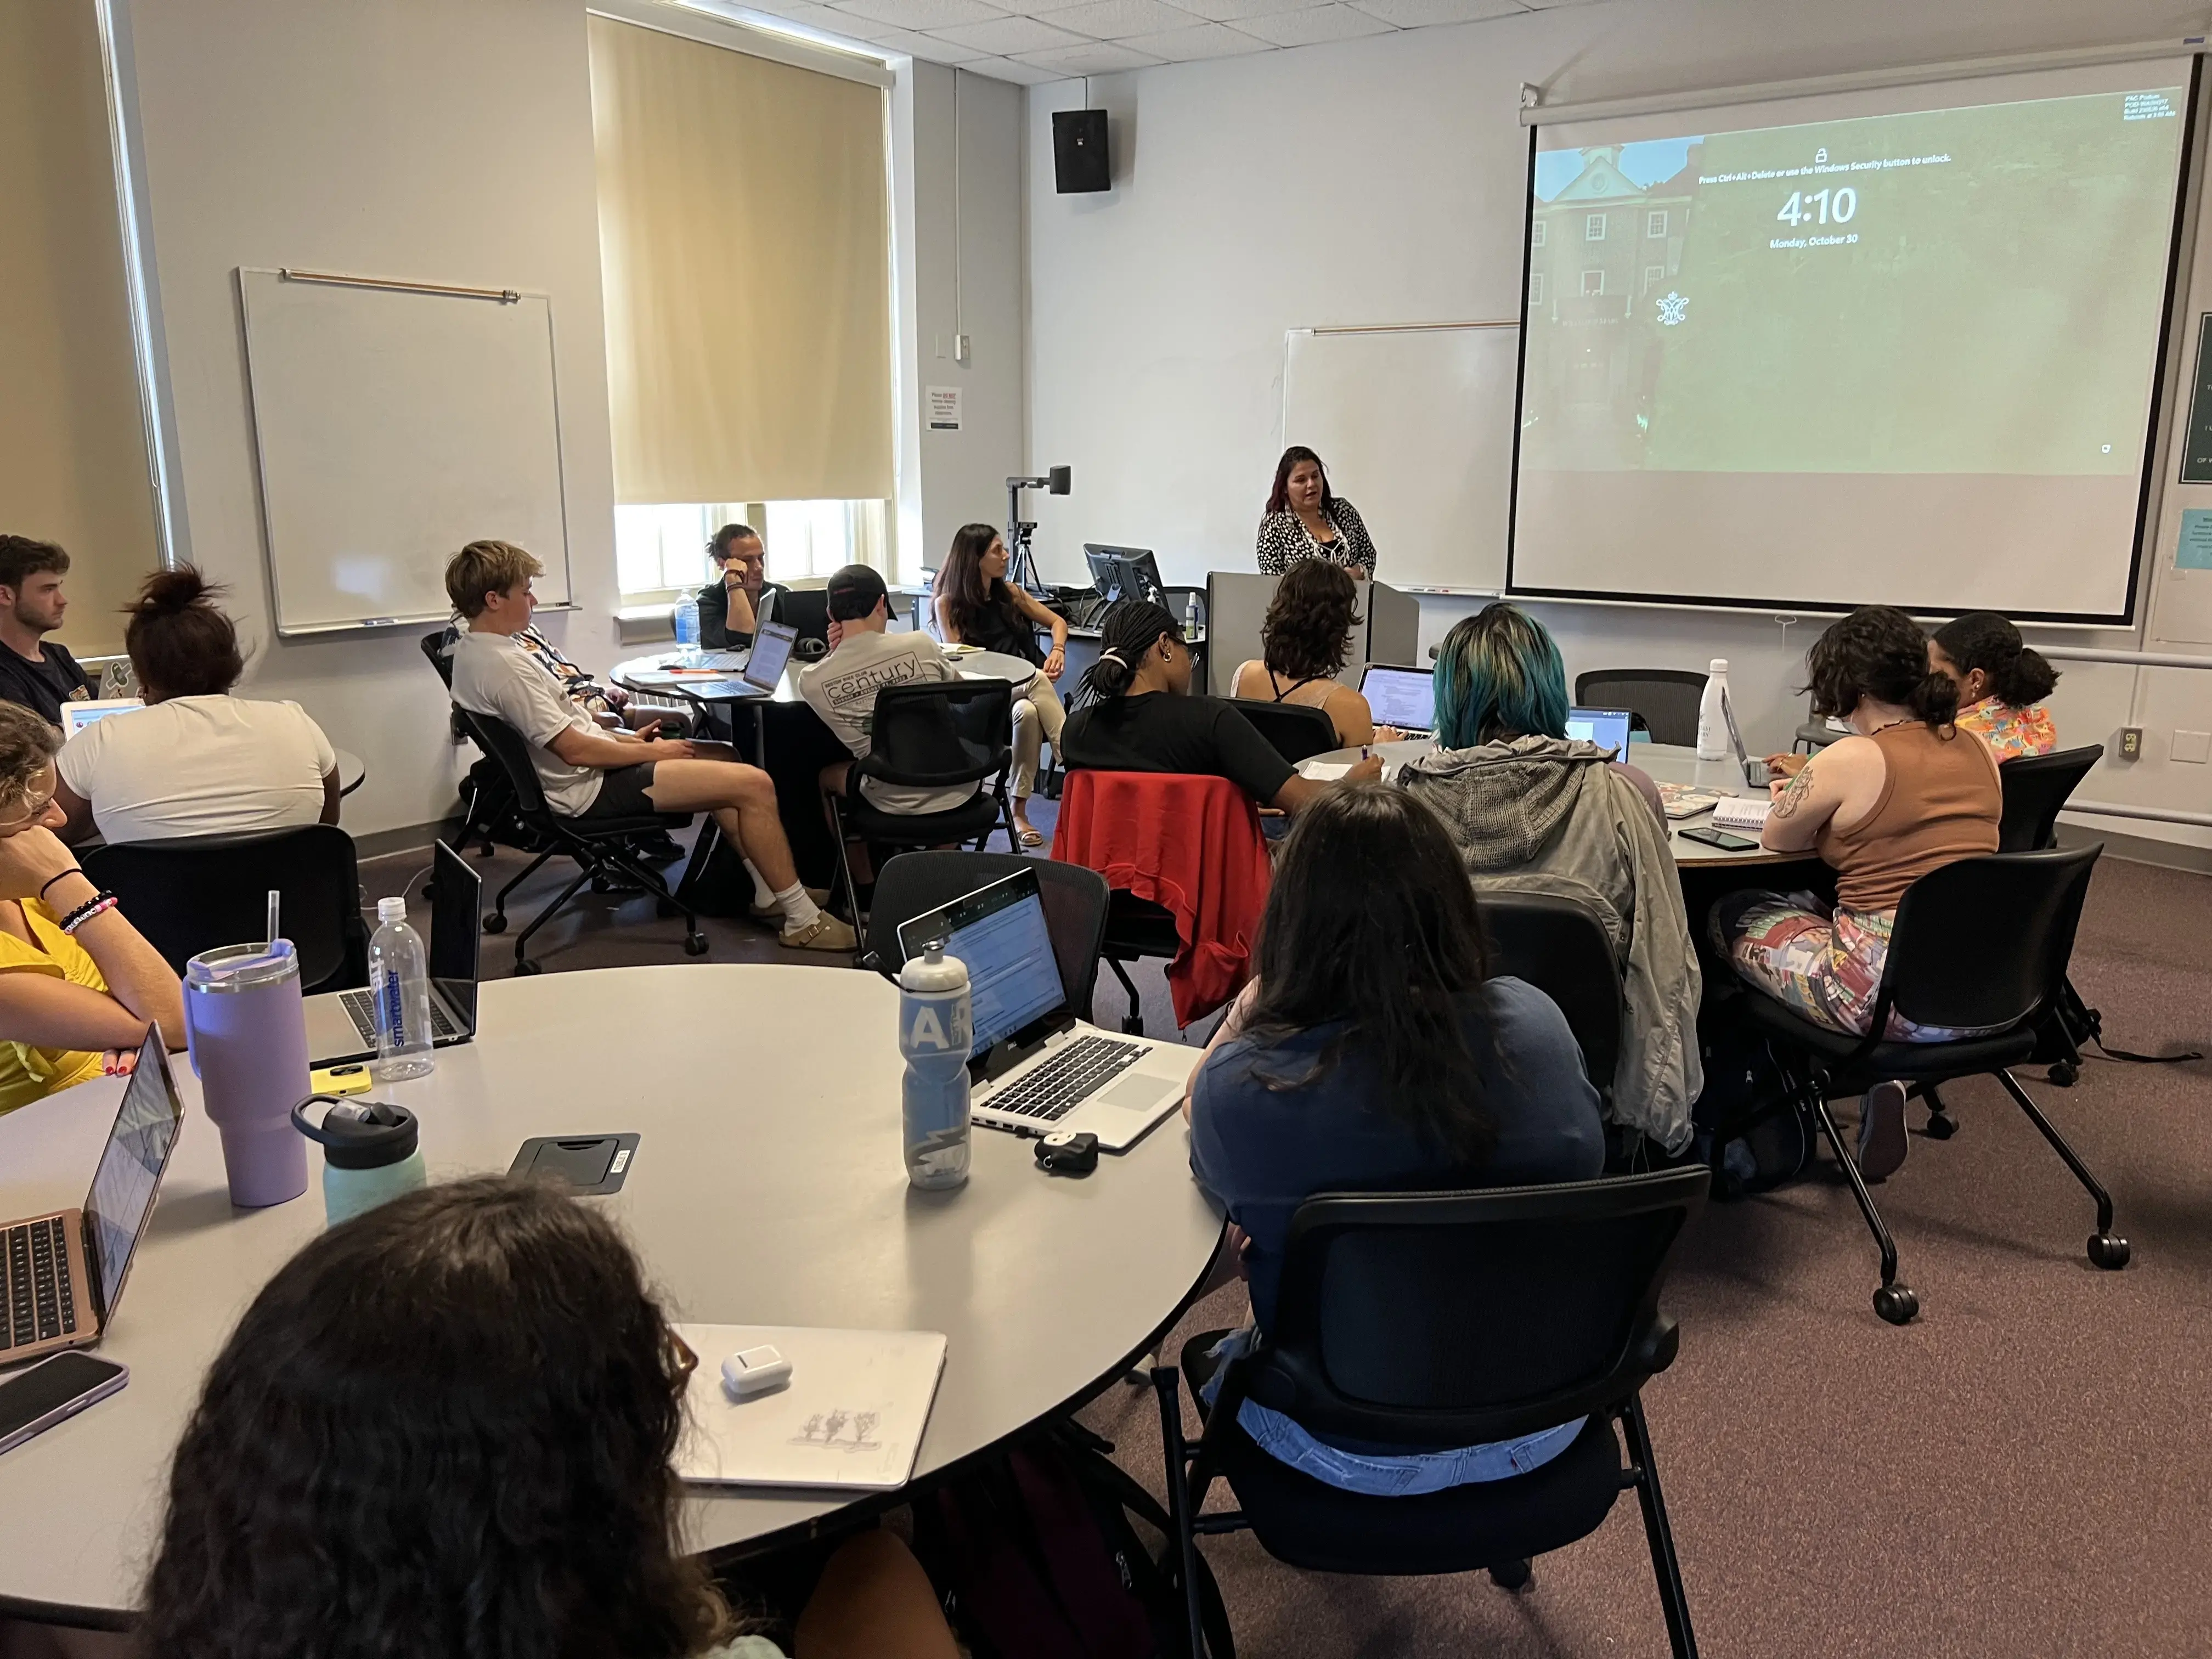 Students listen to journalists speak in a classroom